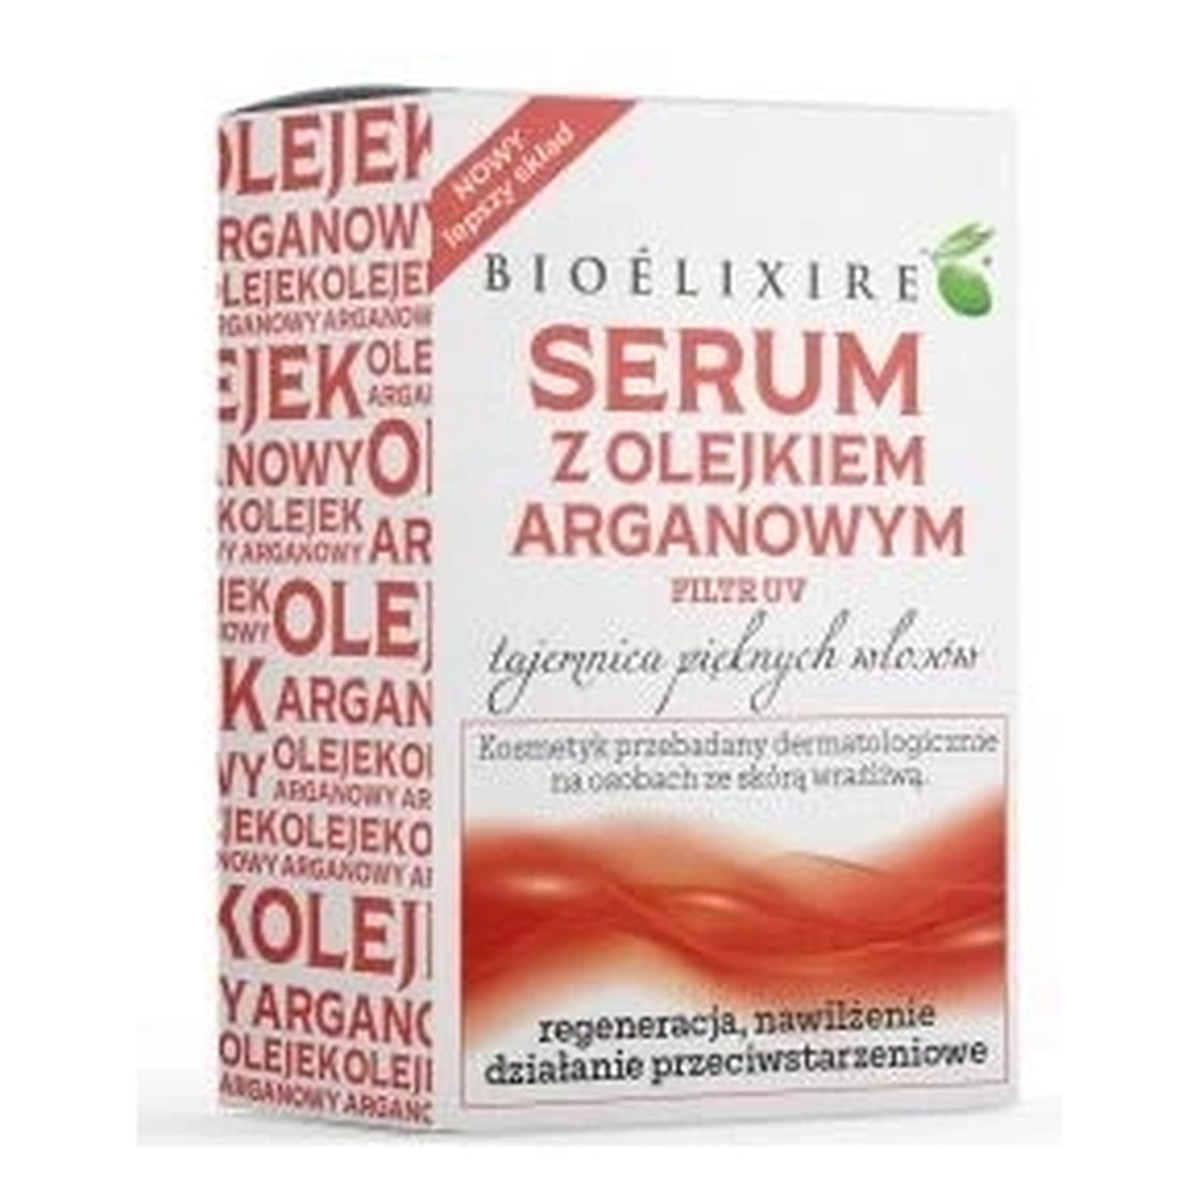 Bioelixire Argan oil serum z olejkiem arganowym 20ml